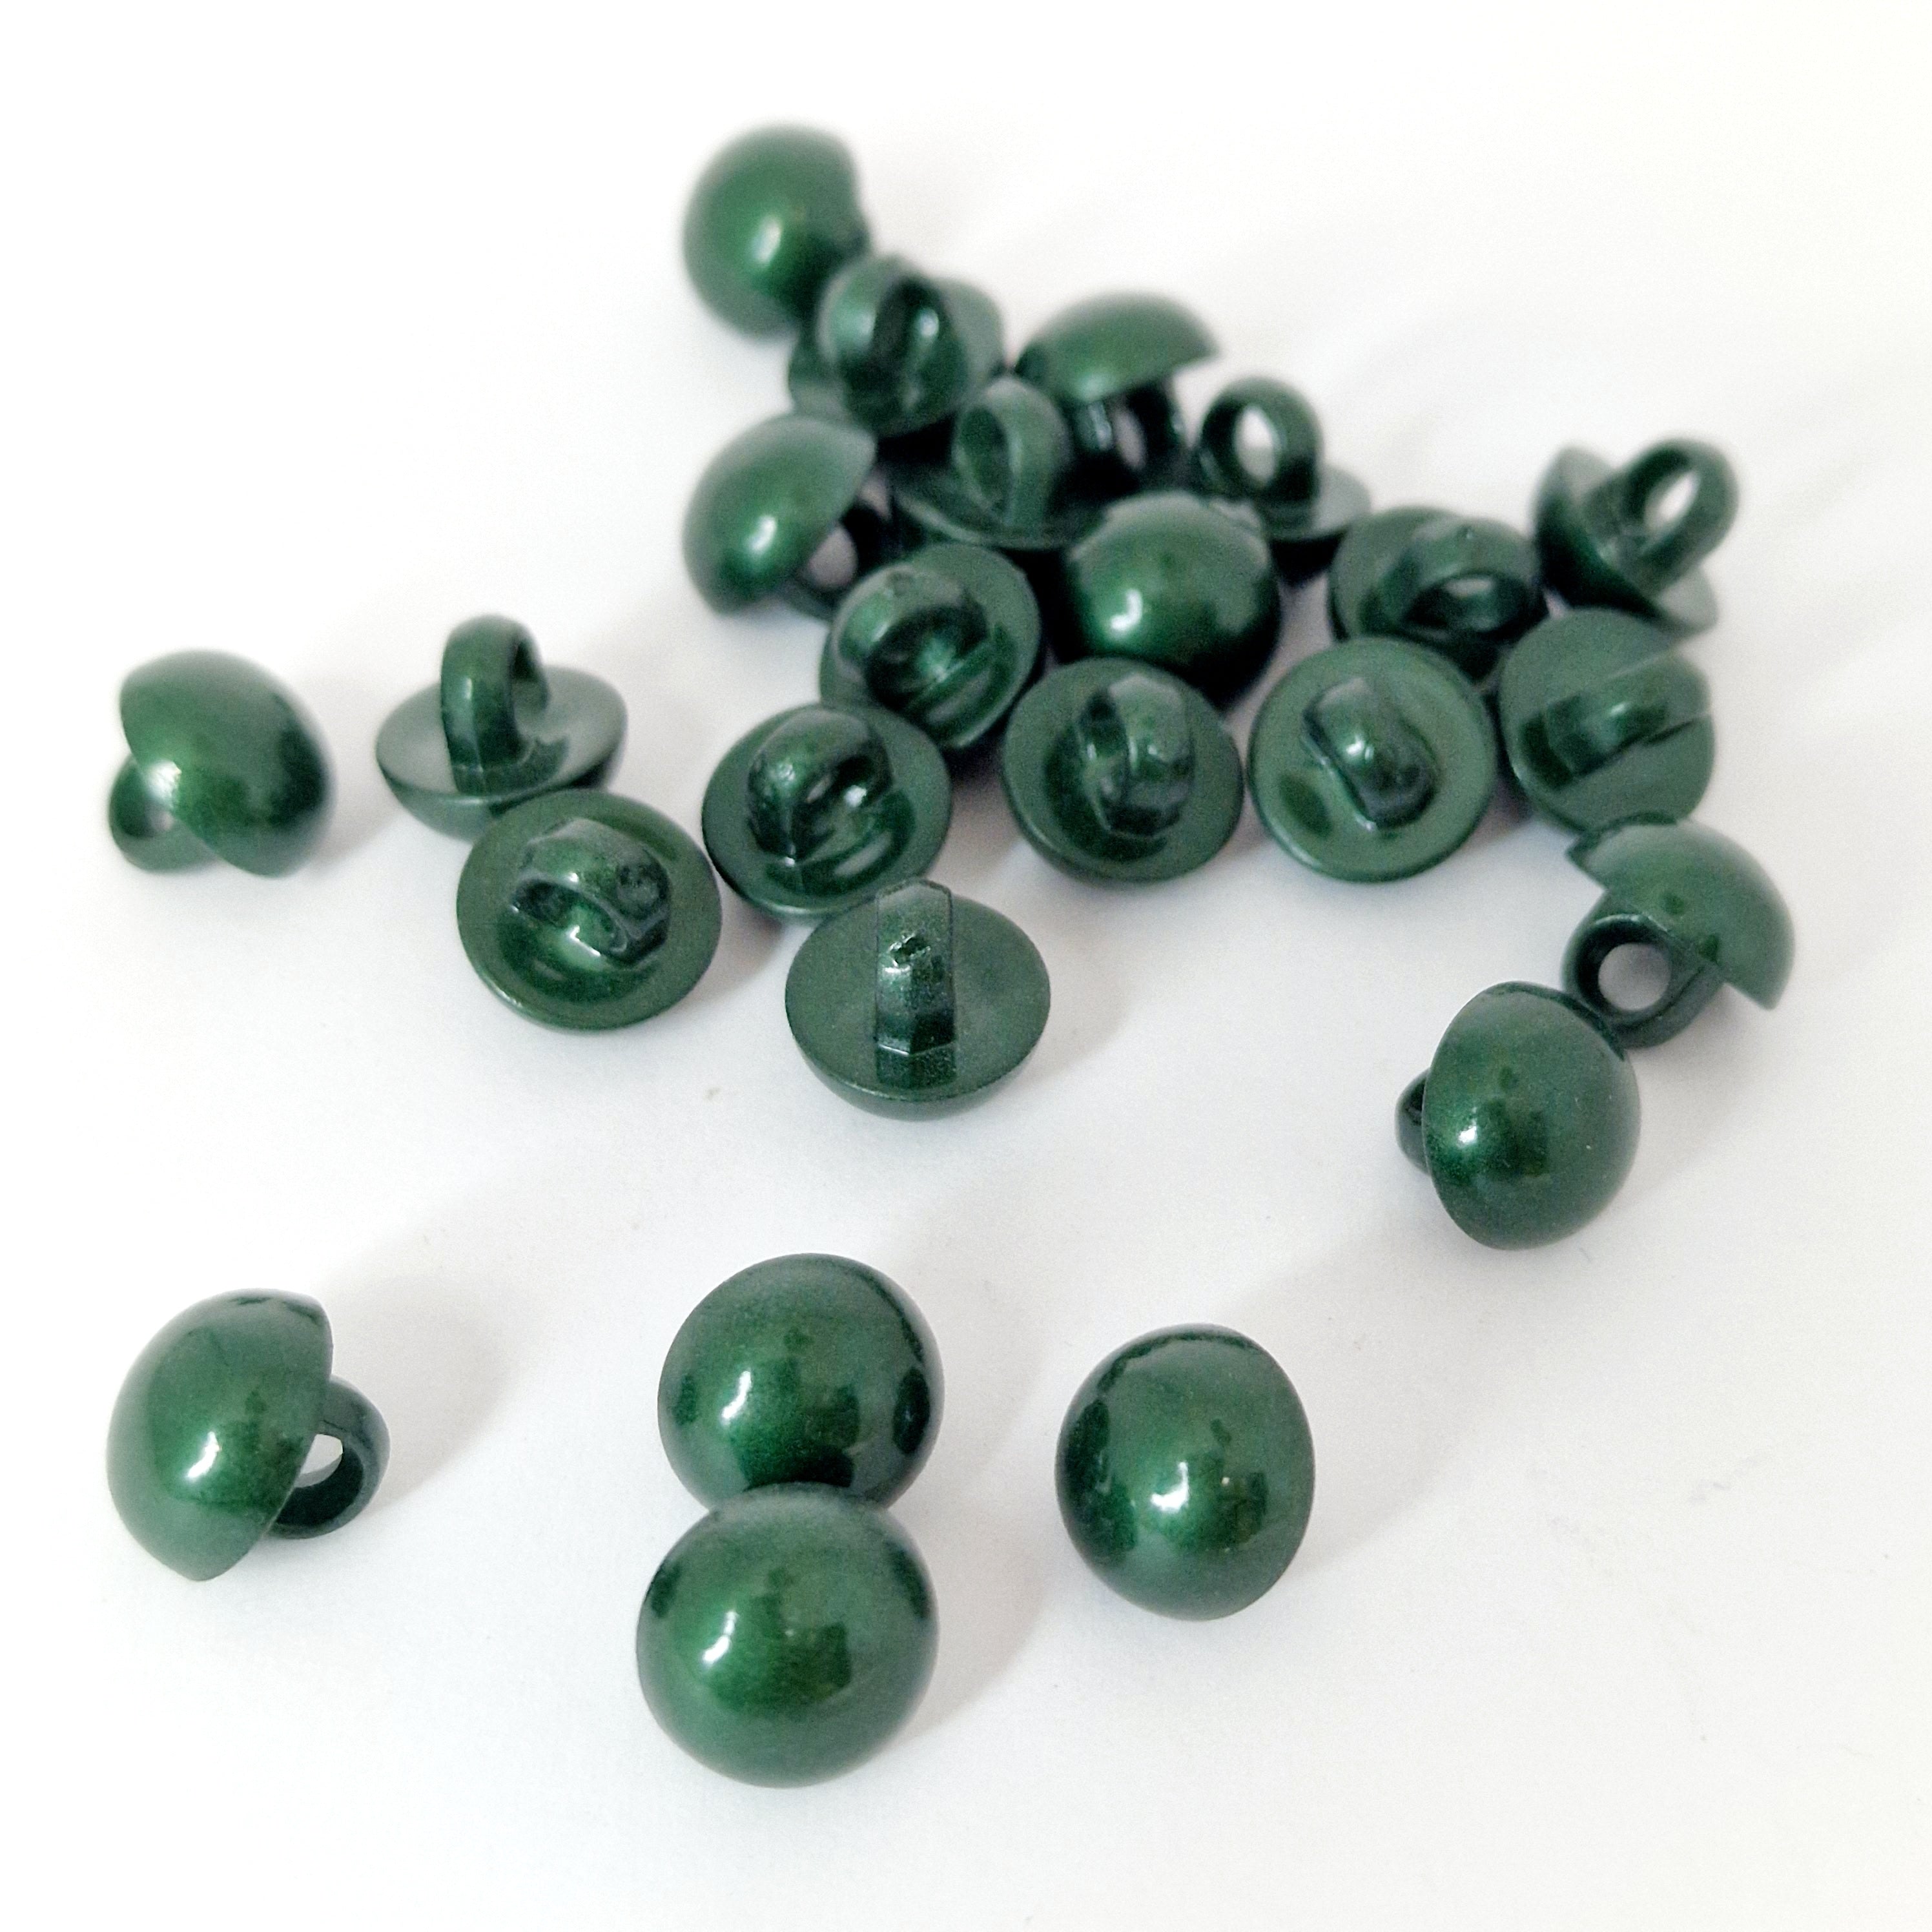 MajorCrafts 24pcs 11mm Dark Green High-Grade Acrylic Small Round Sewing Mushroom Shank Buttons